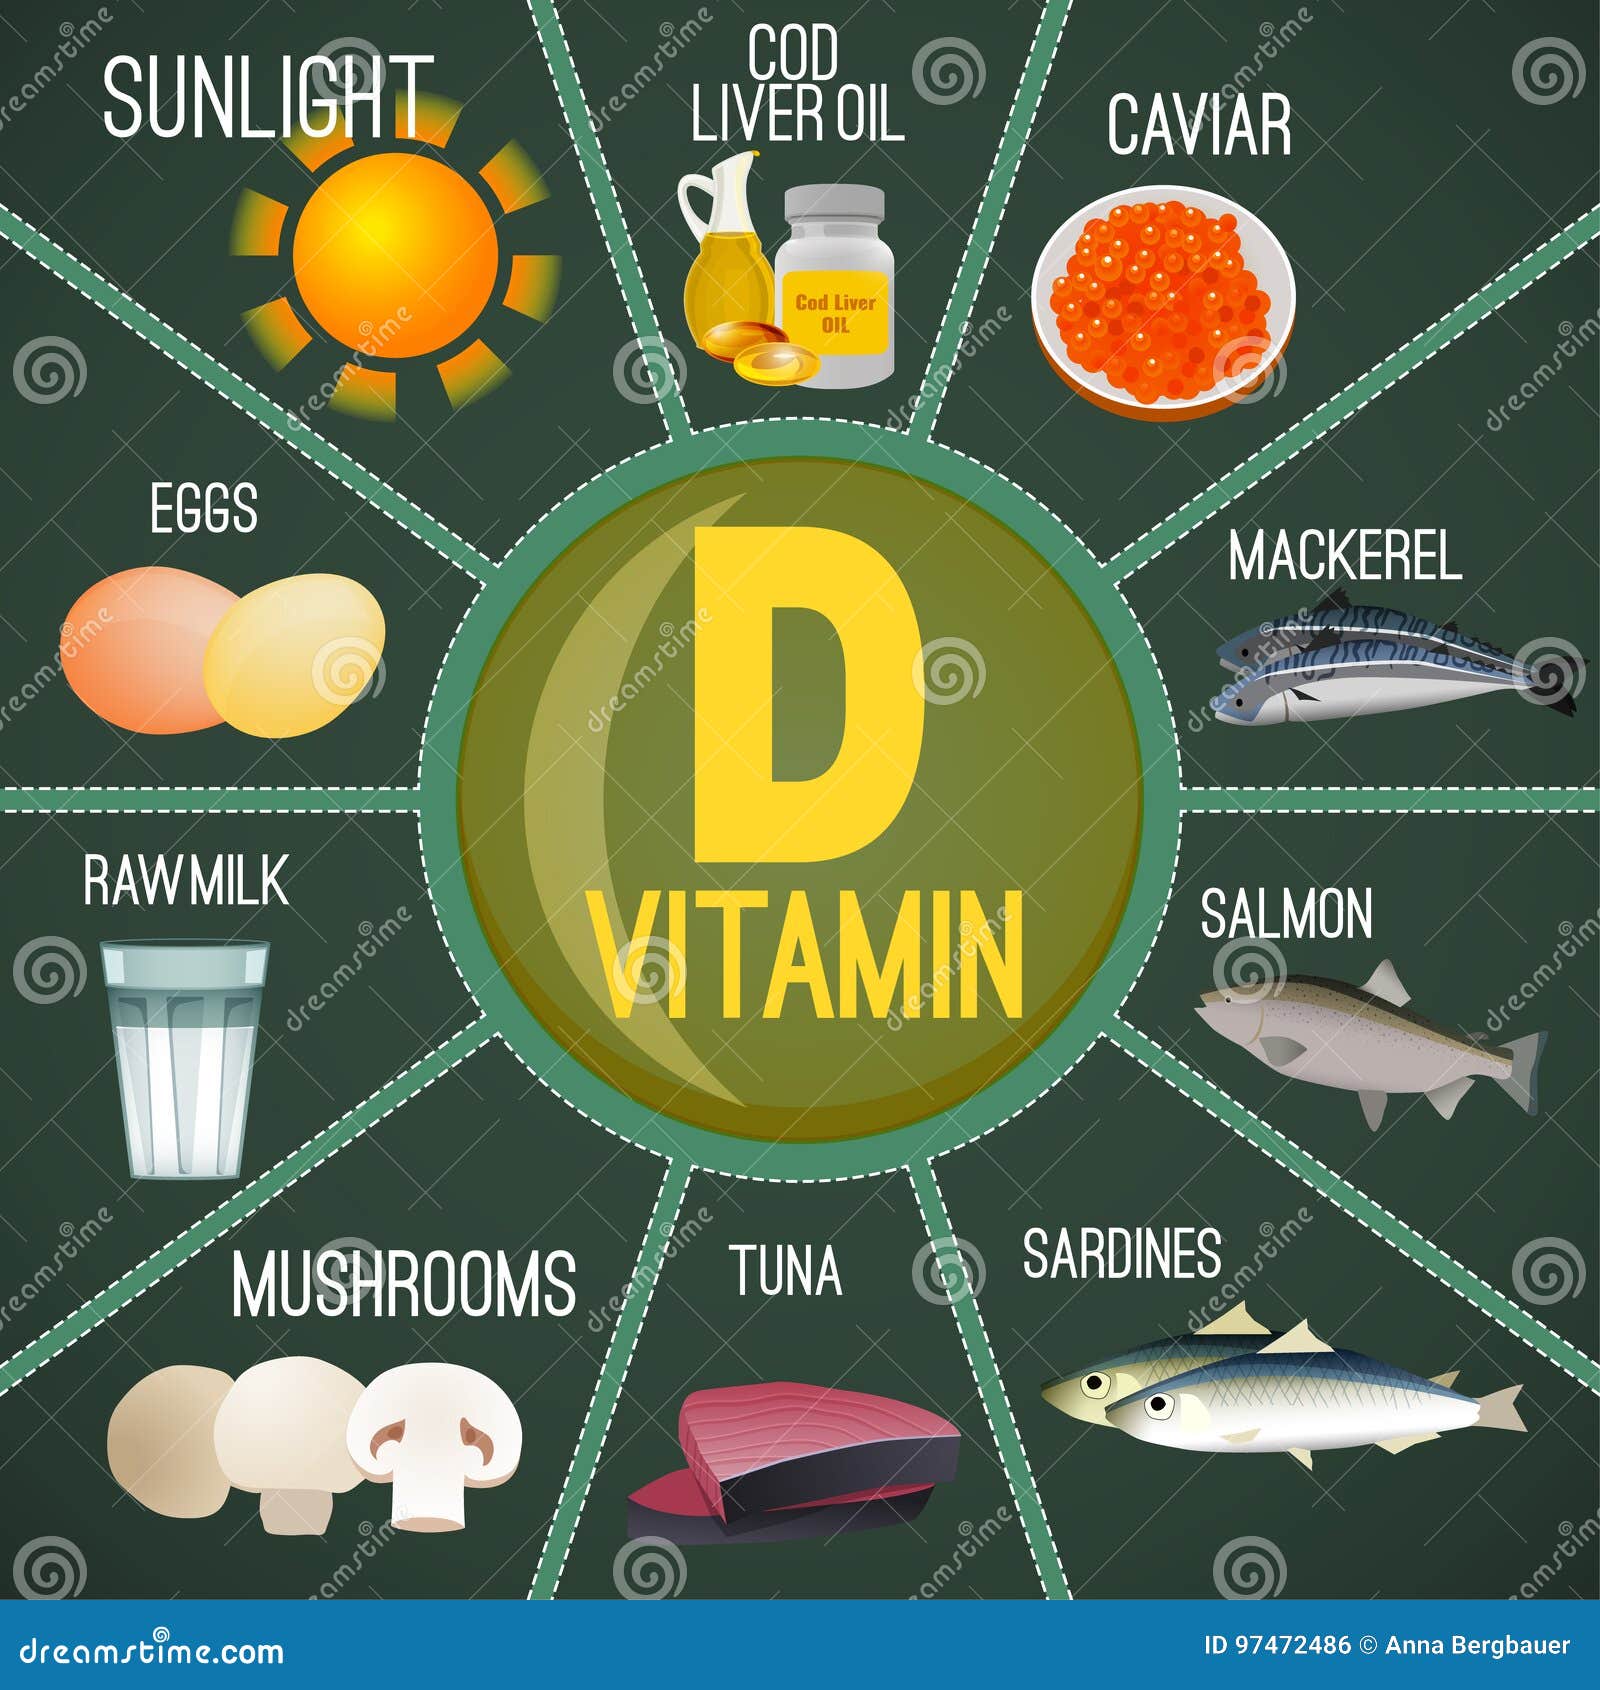 vitamin d food